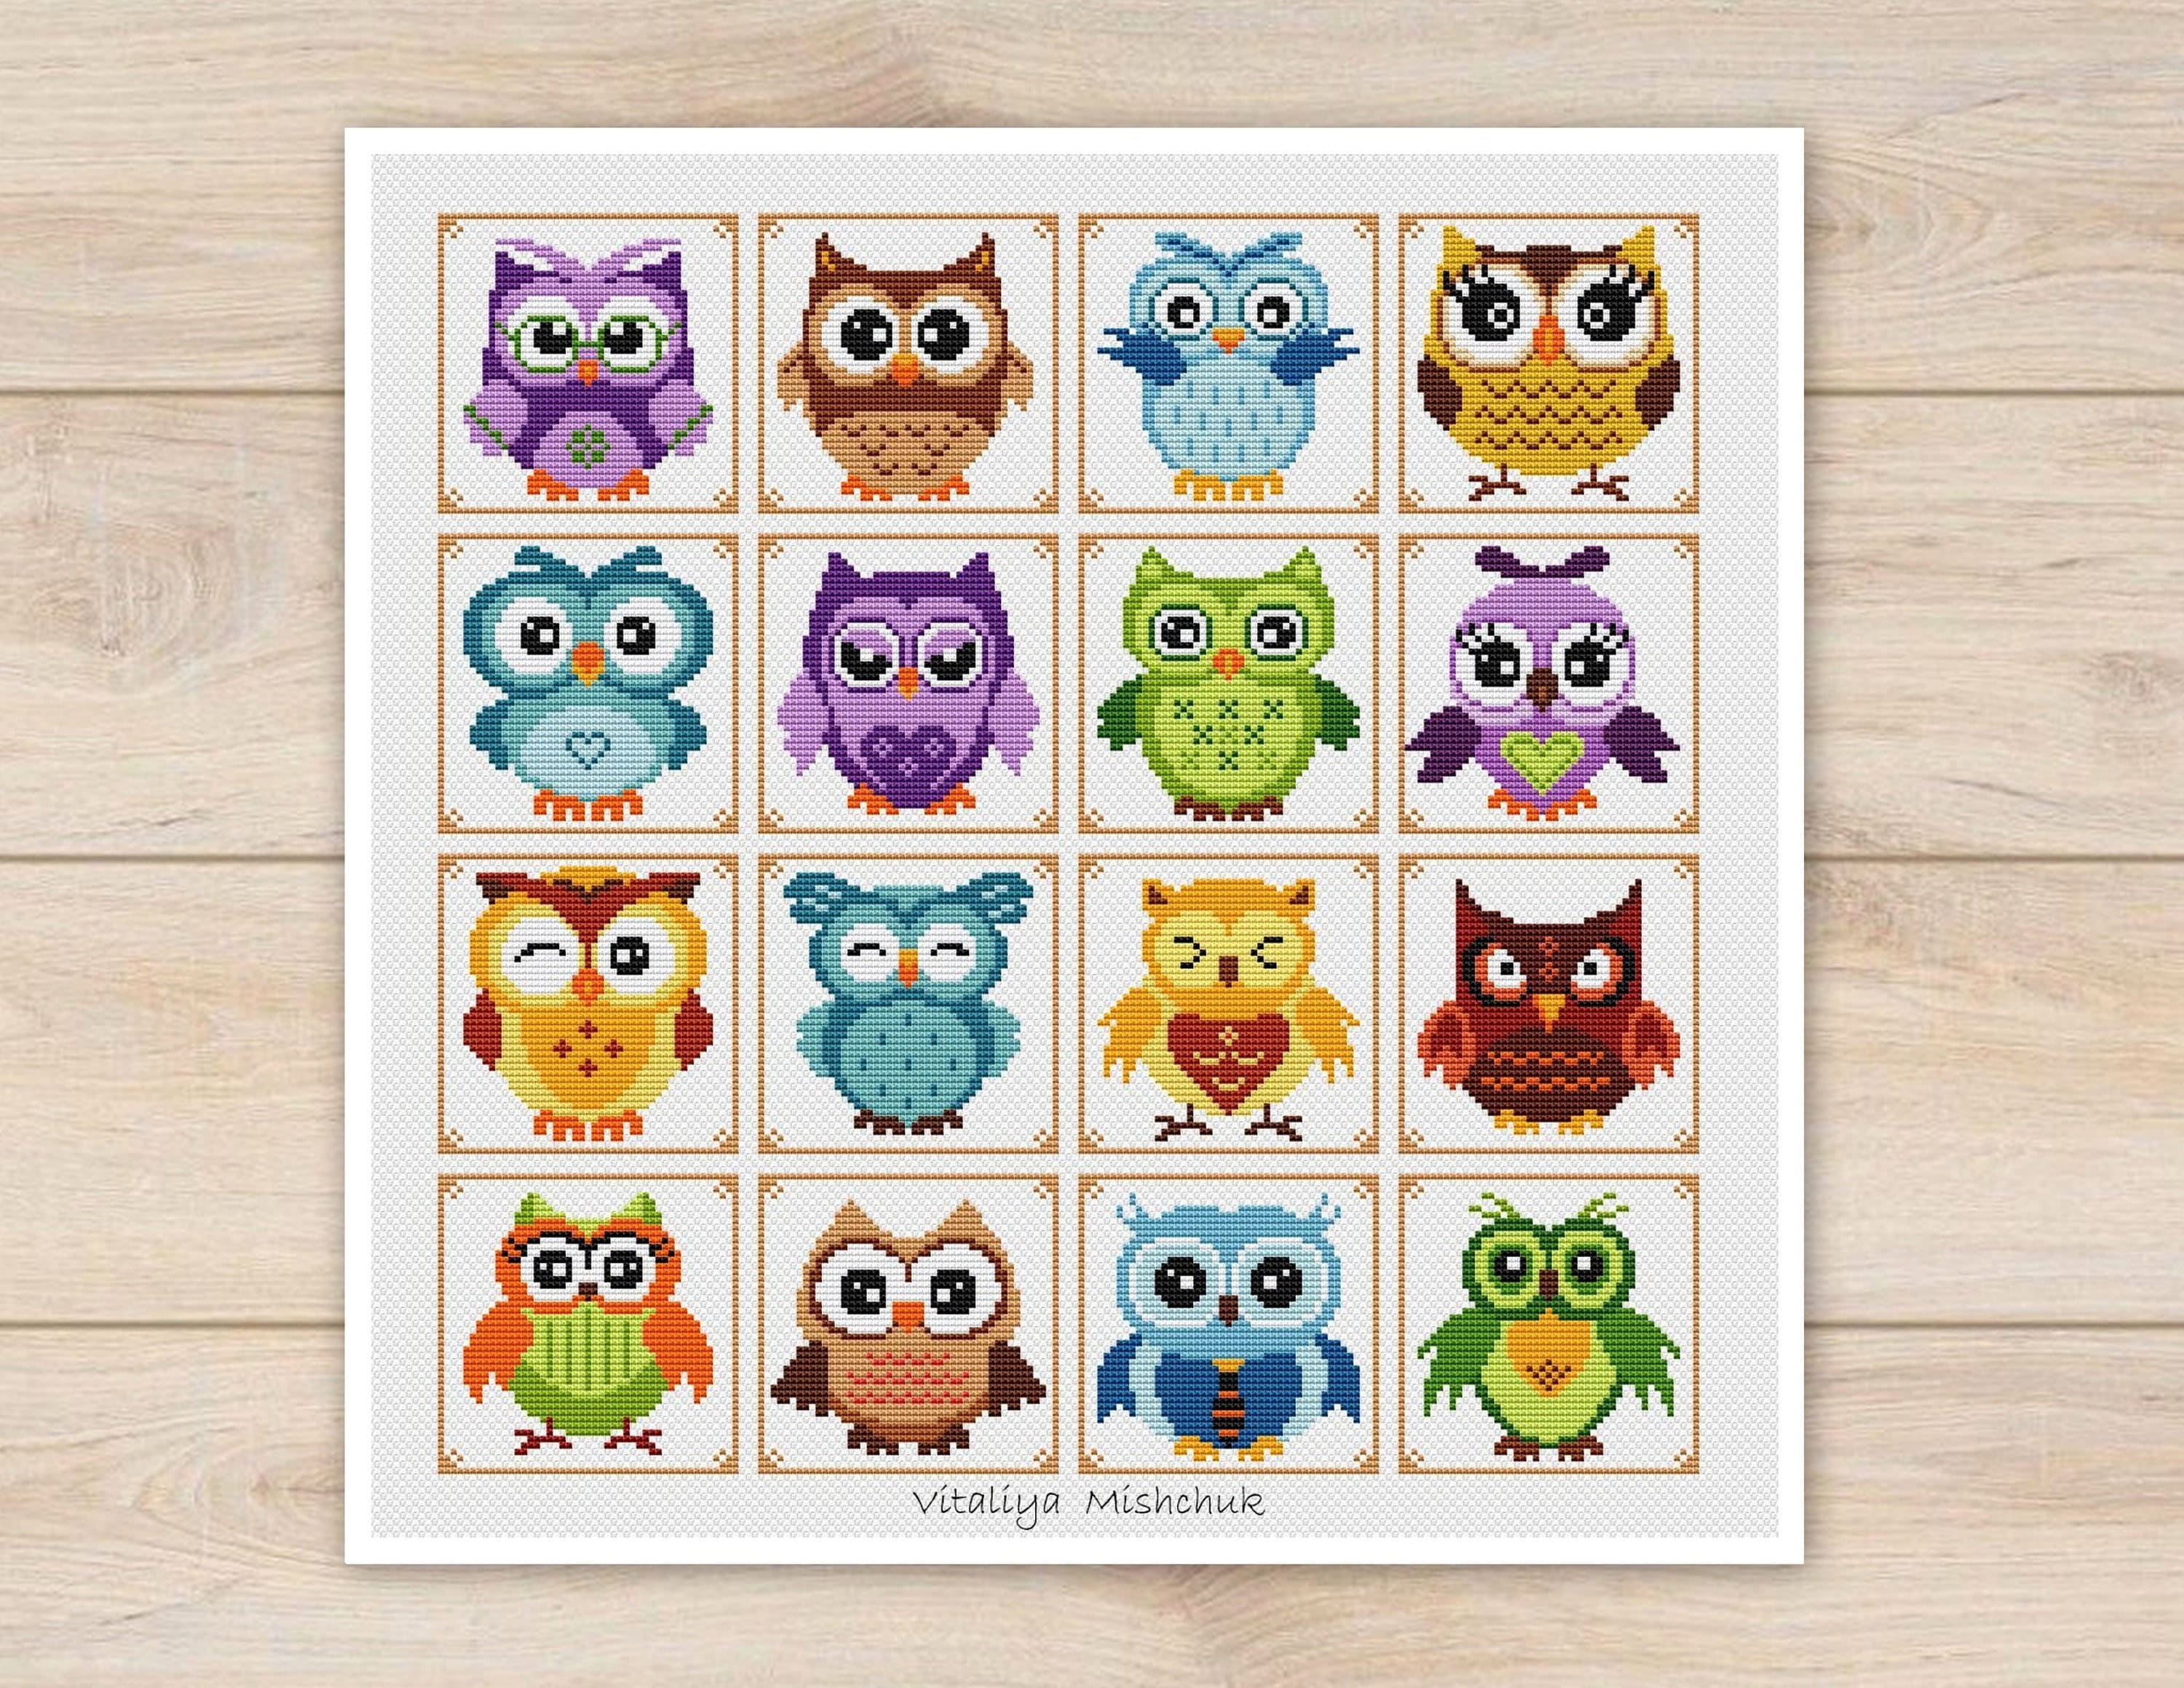 Kid Stitch' Cross Stitch Kit ~ Owl EASY FOR KIDS & BEGINNERS #021-1757